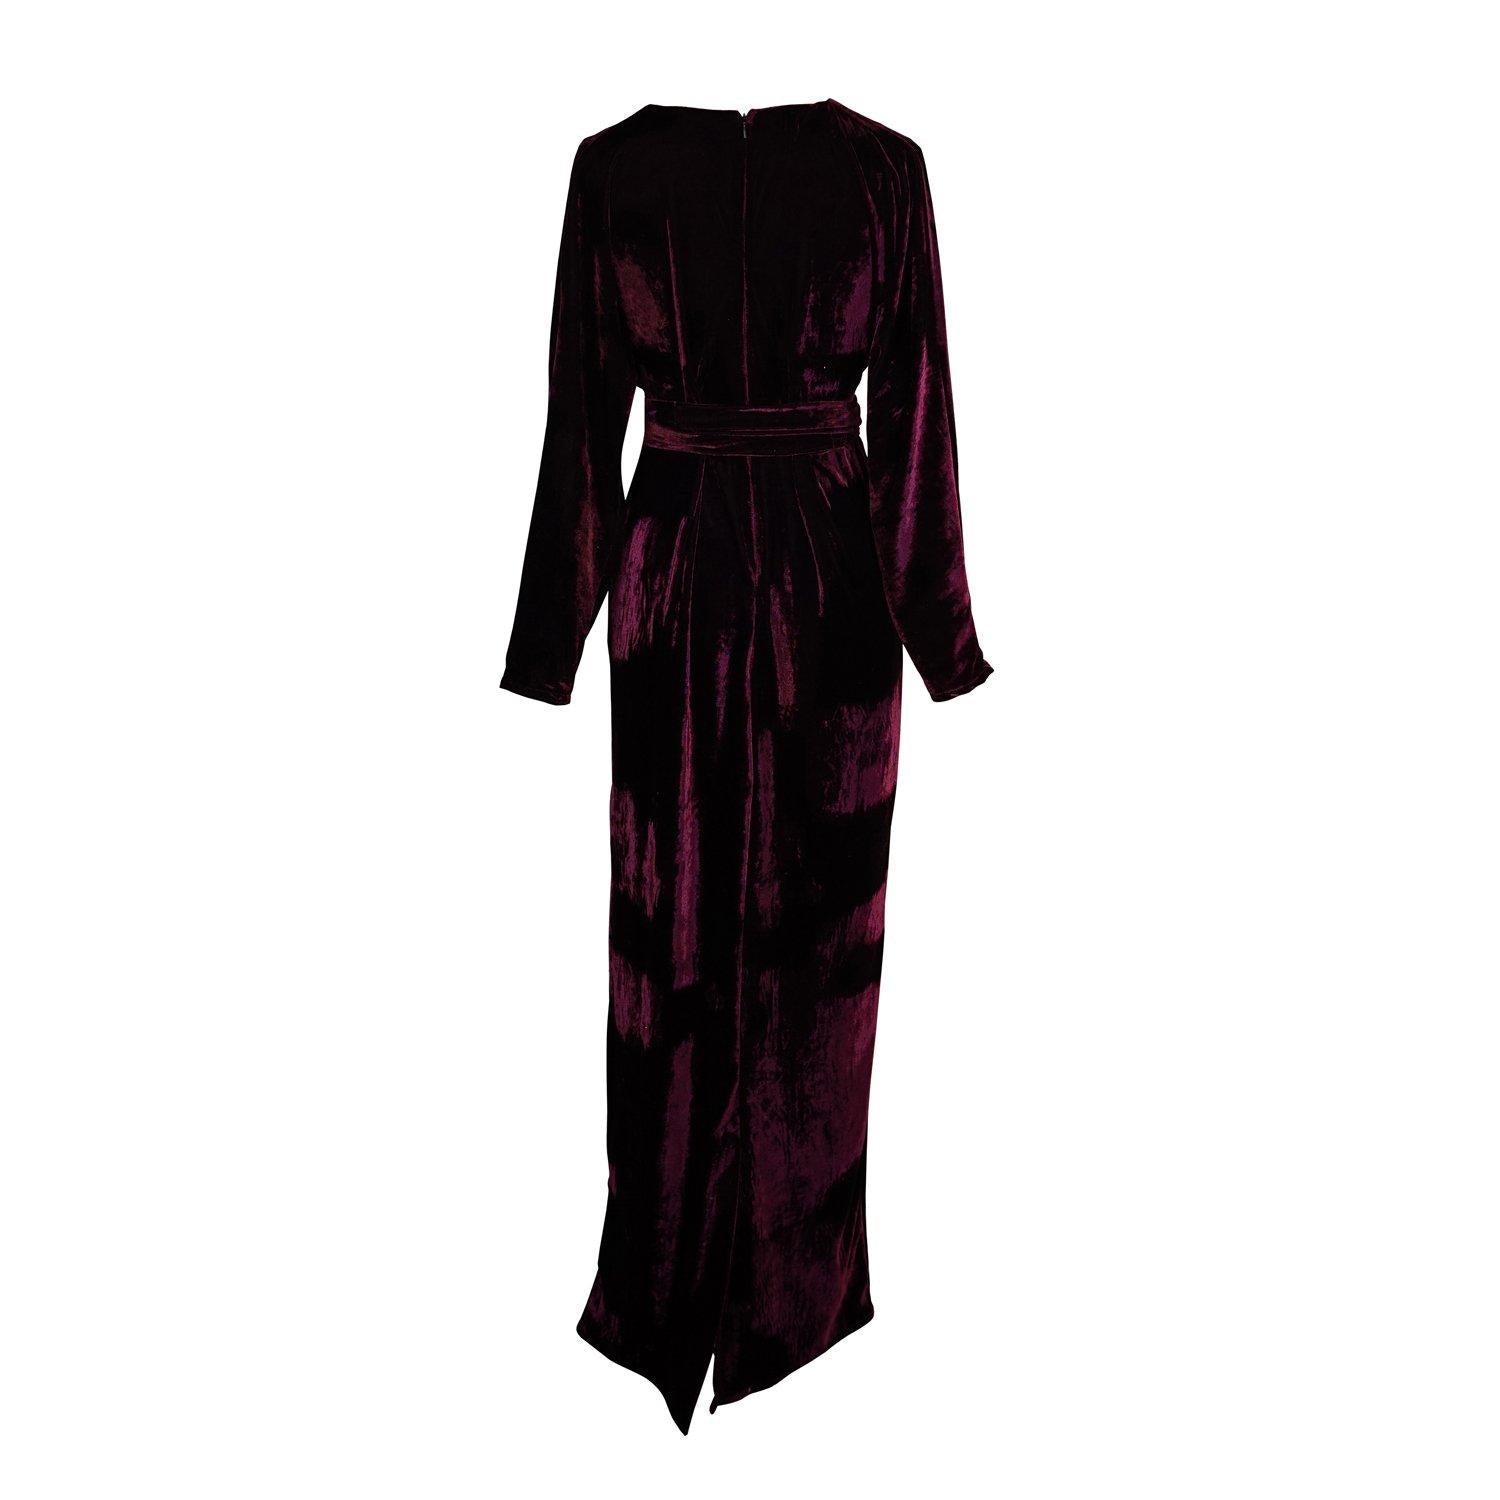 jennafer grace stretch velvet dark plum violet purple wine evening cocktail date night dress gown simple sexy handmade